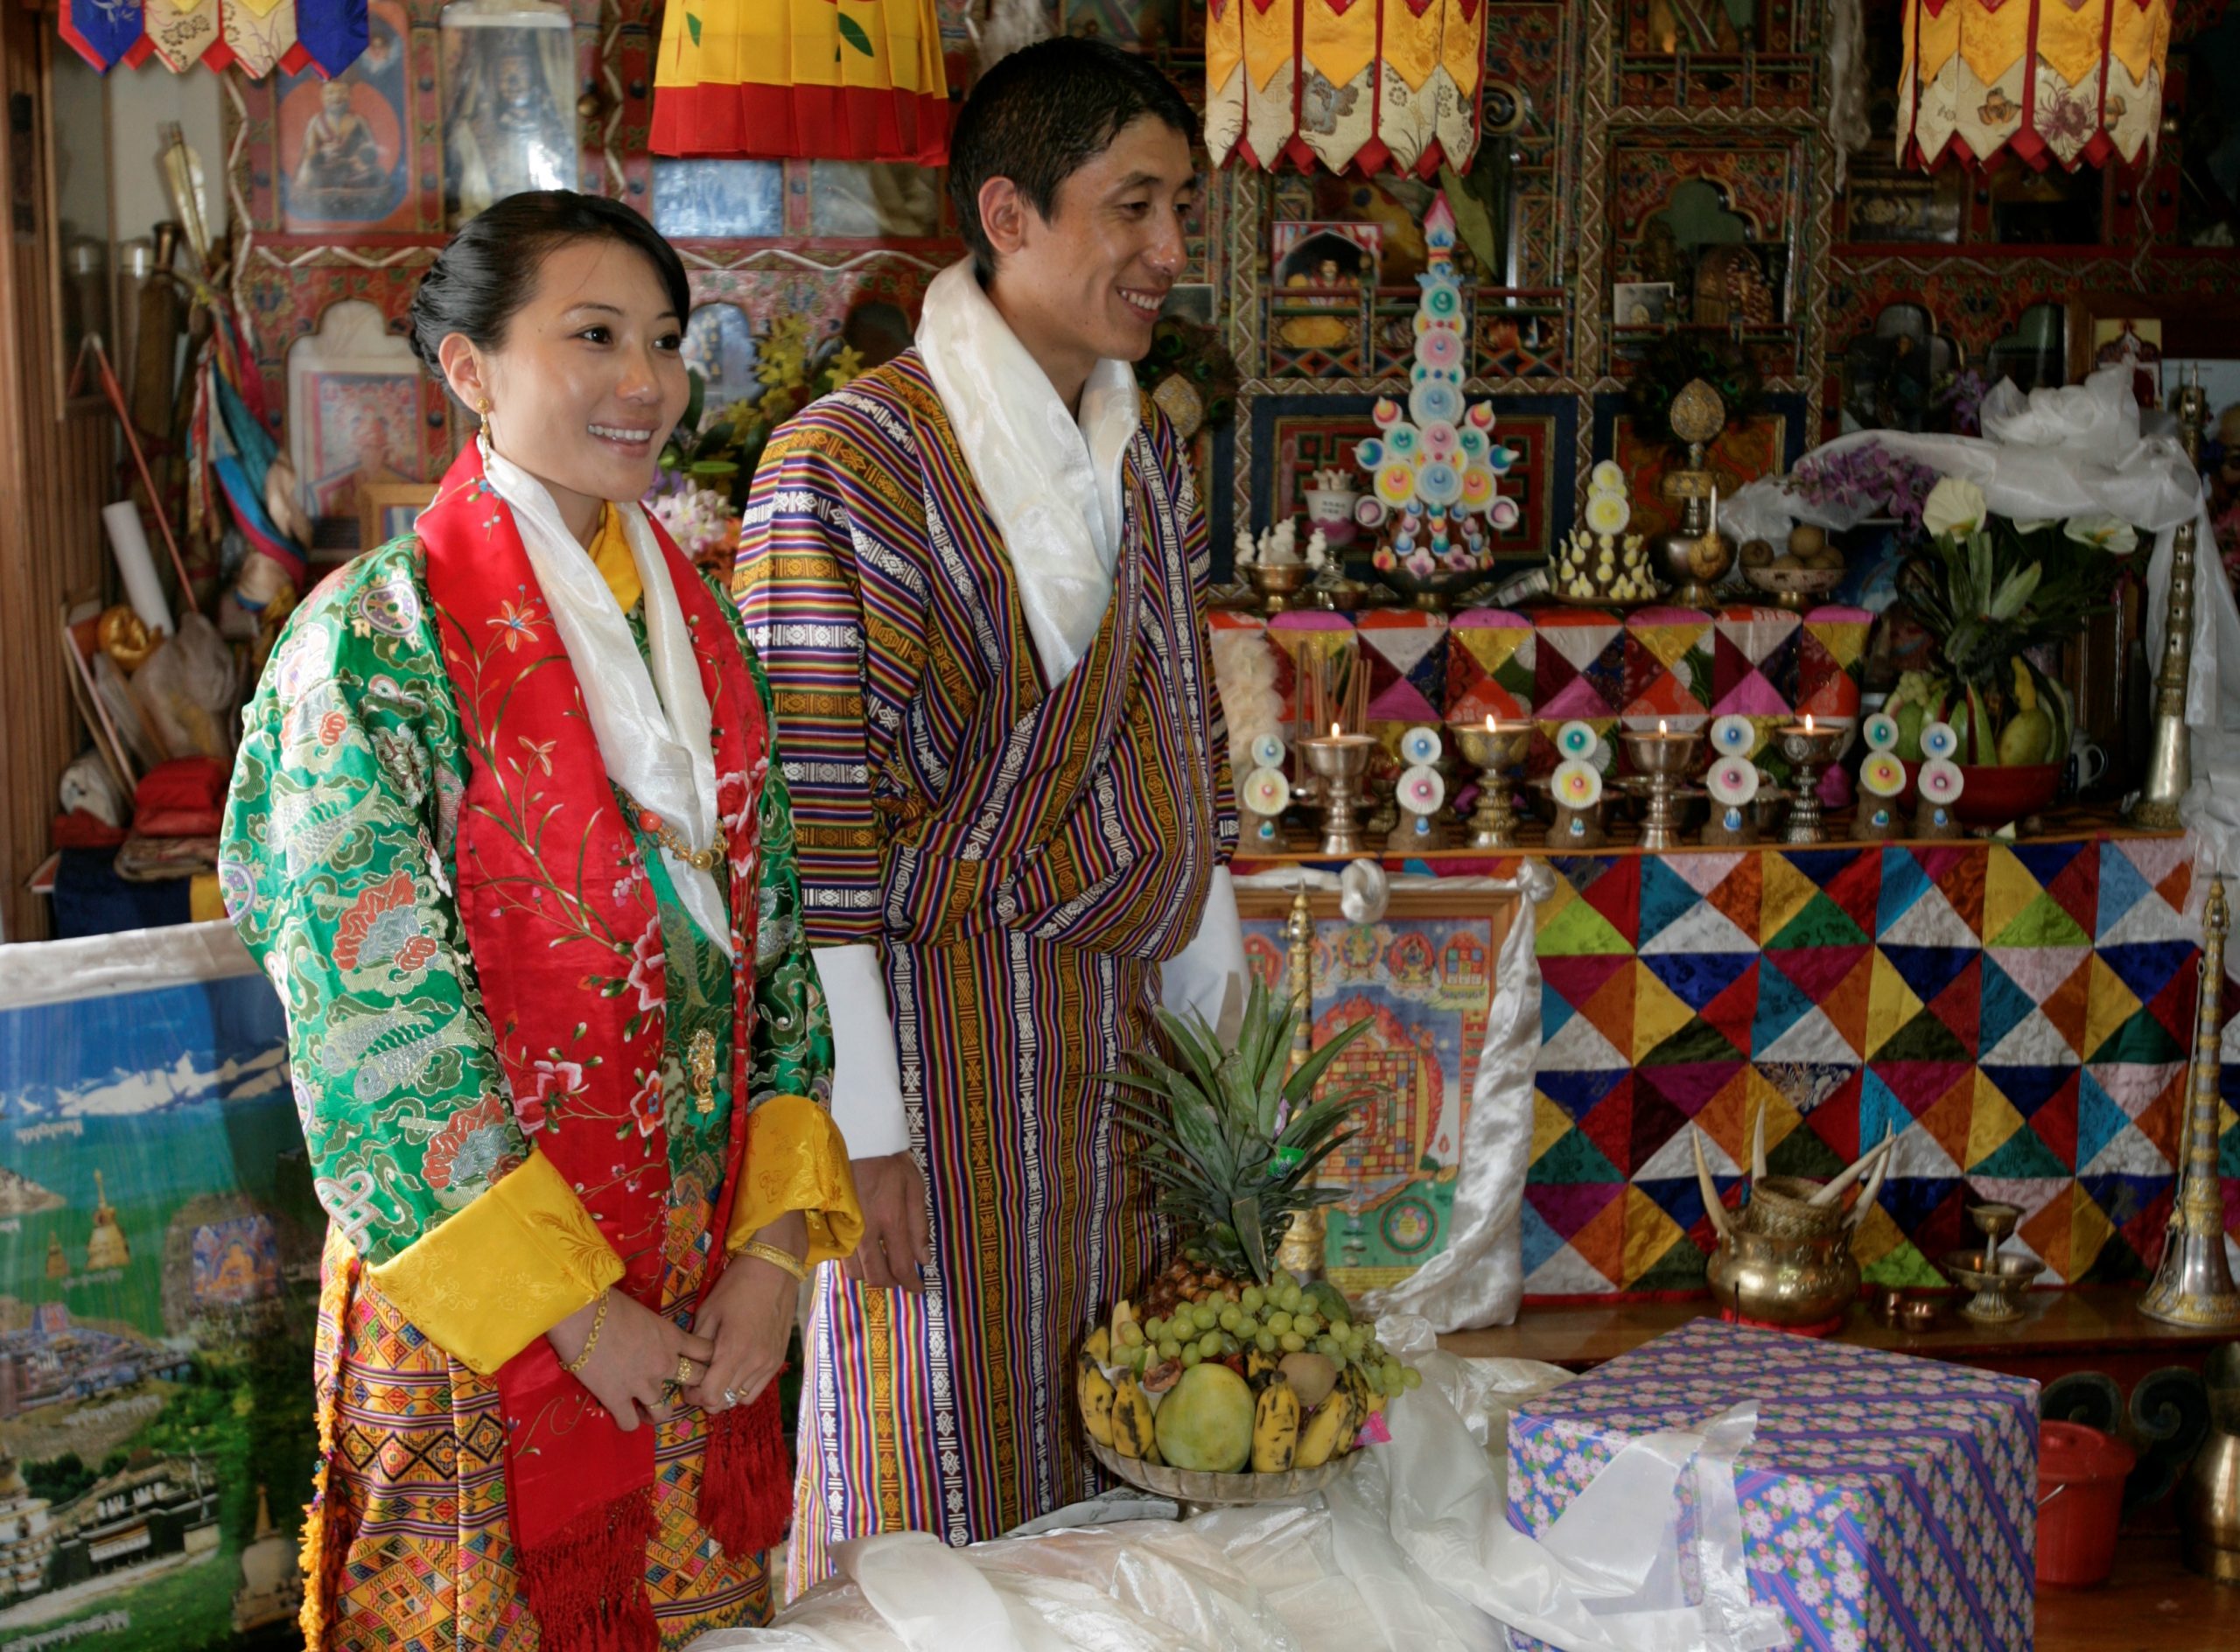 Heavenly Bhutan Travels